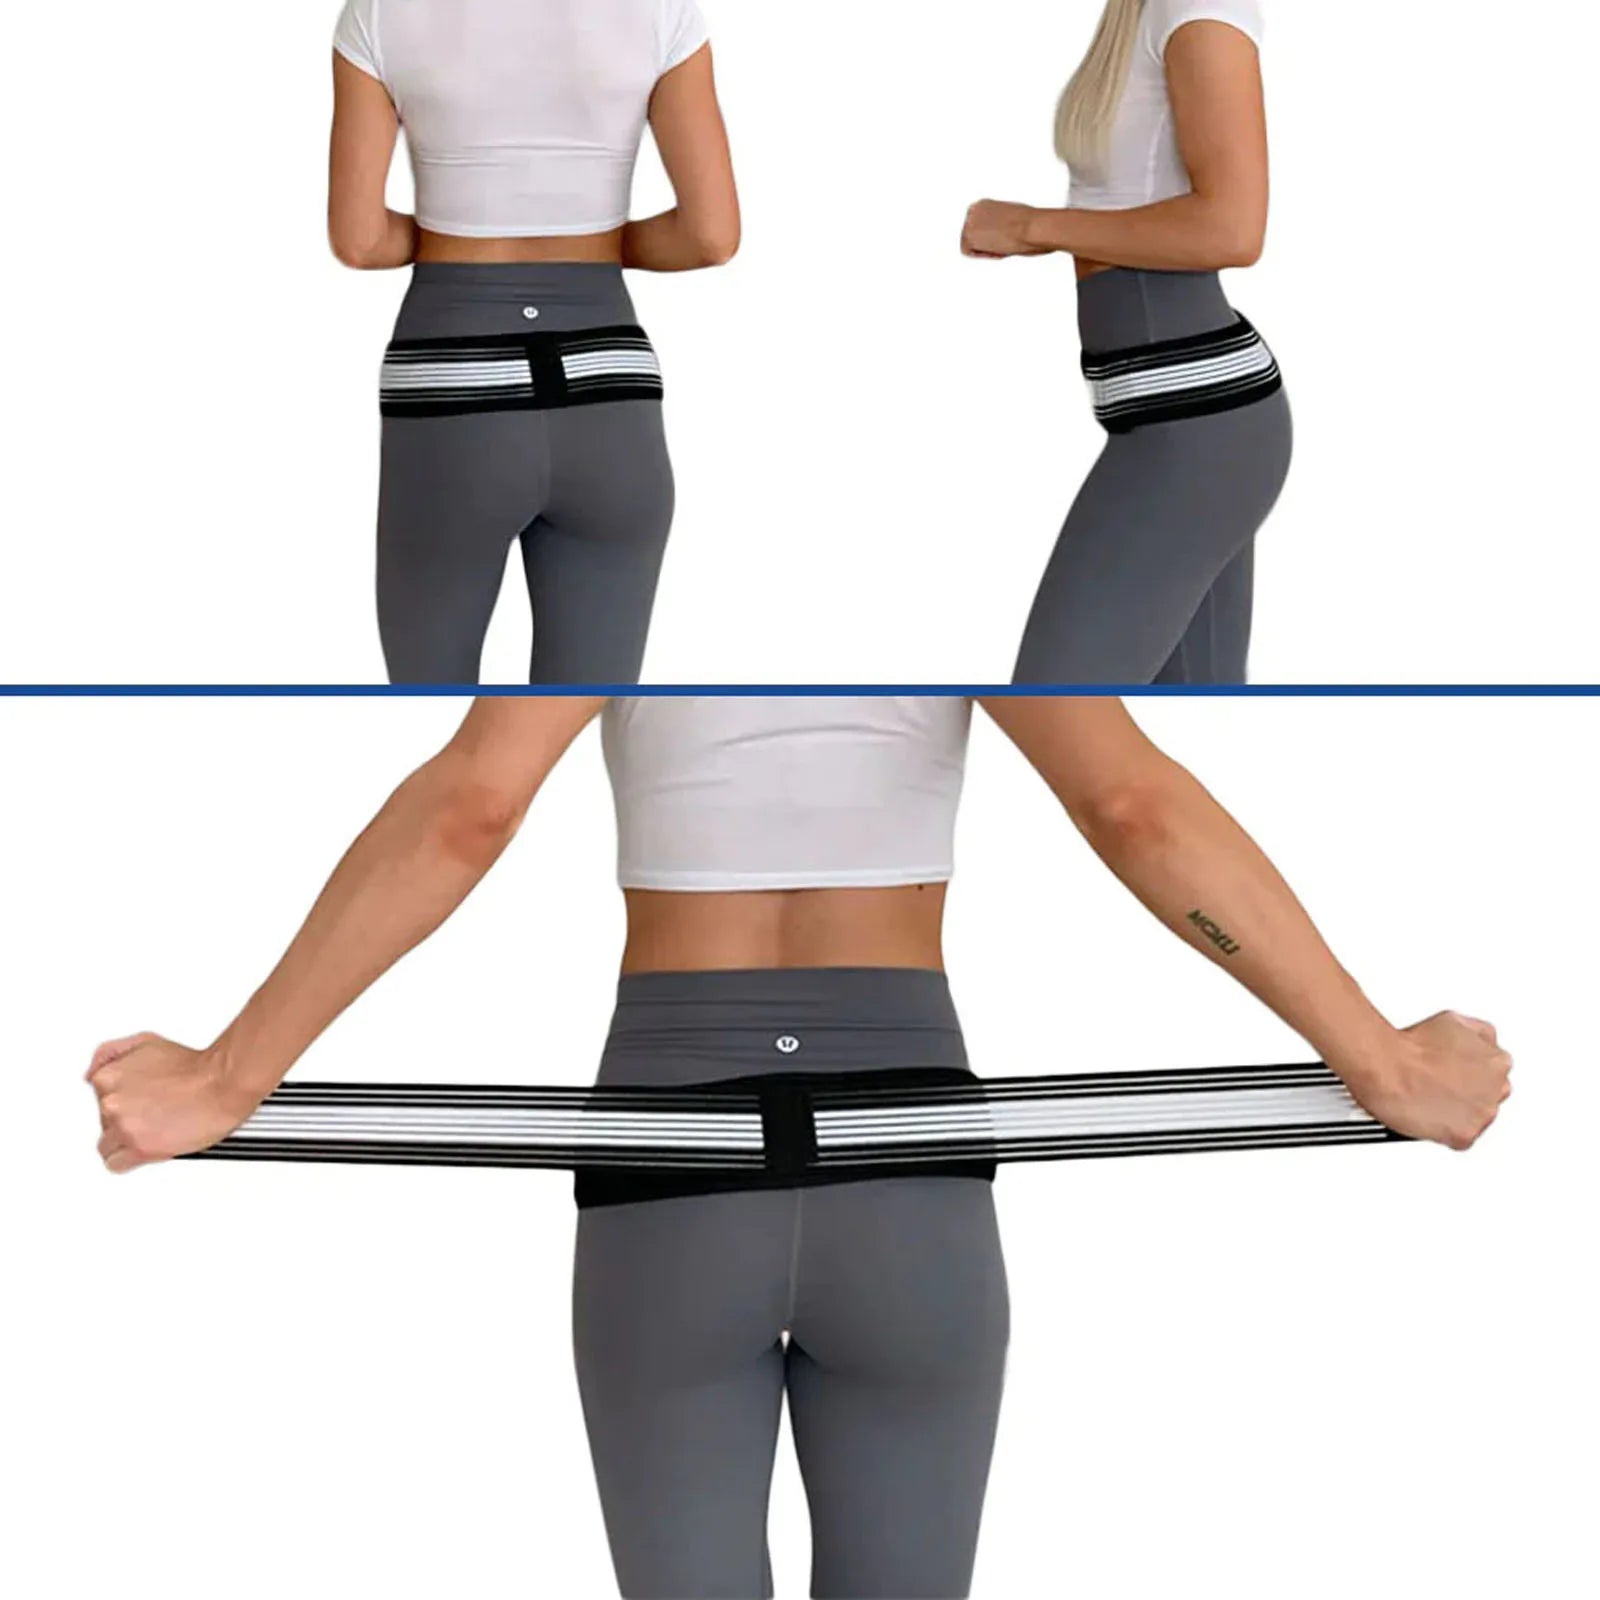 Backbone Support Belt